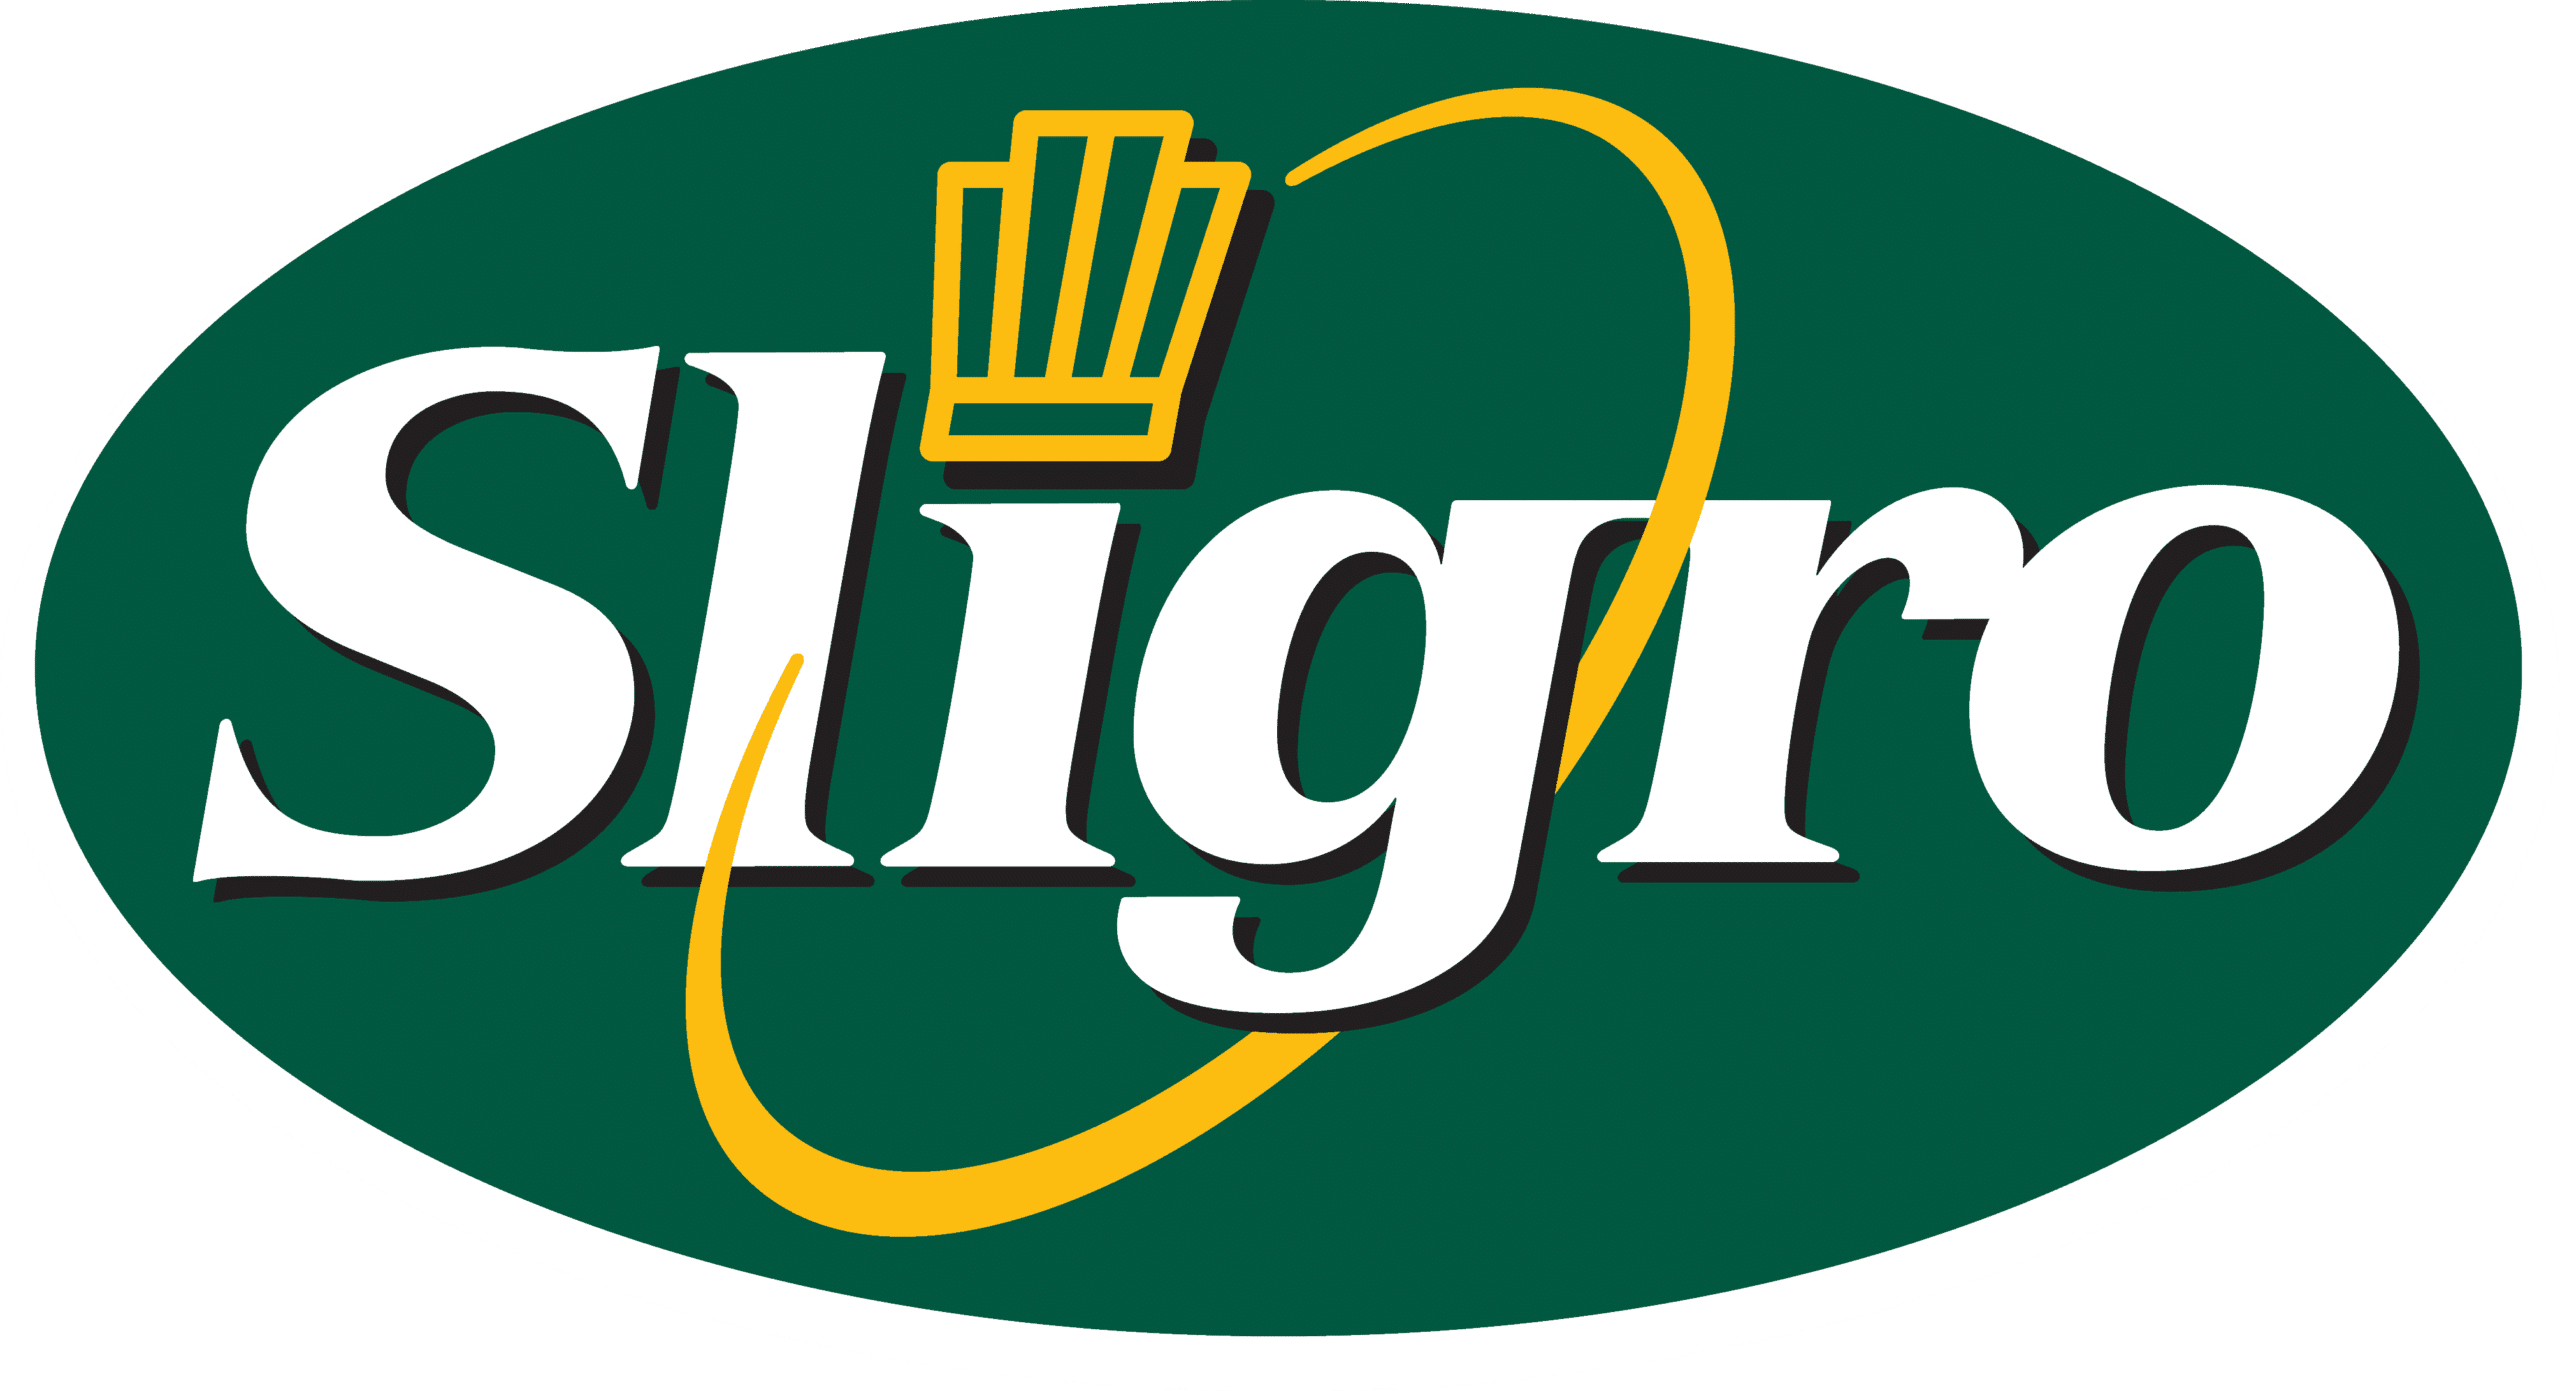 Logo Sligro